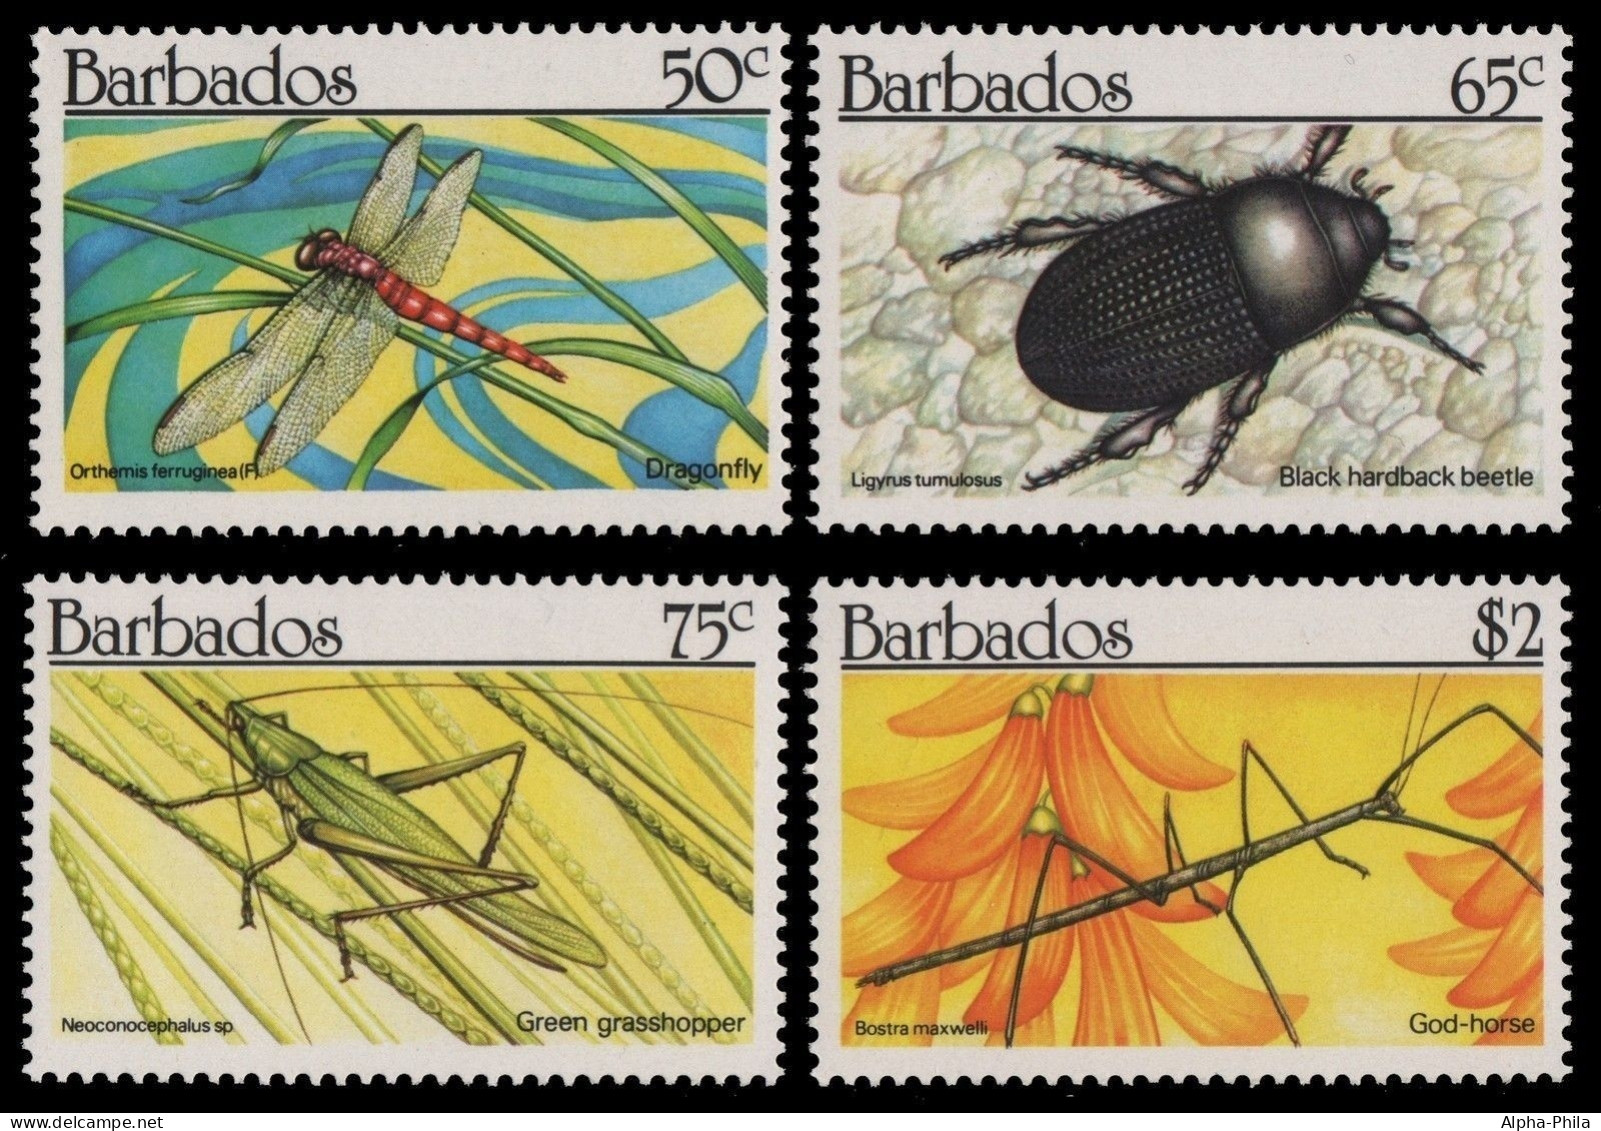 Barbados 1990 - Mi-Nr. 759-762 ** - MNH - Insekten / Insects - Barbades (1966-...)